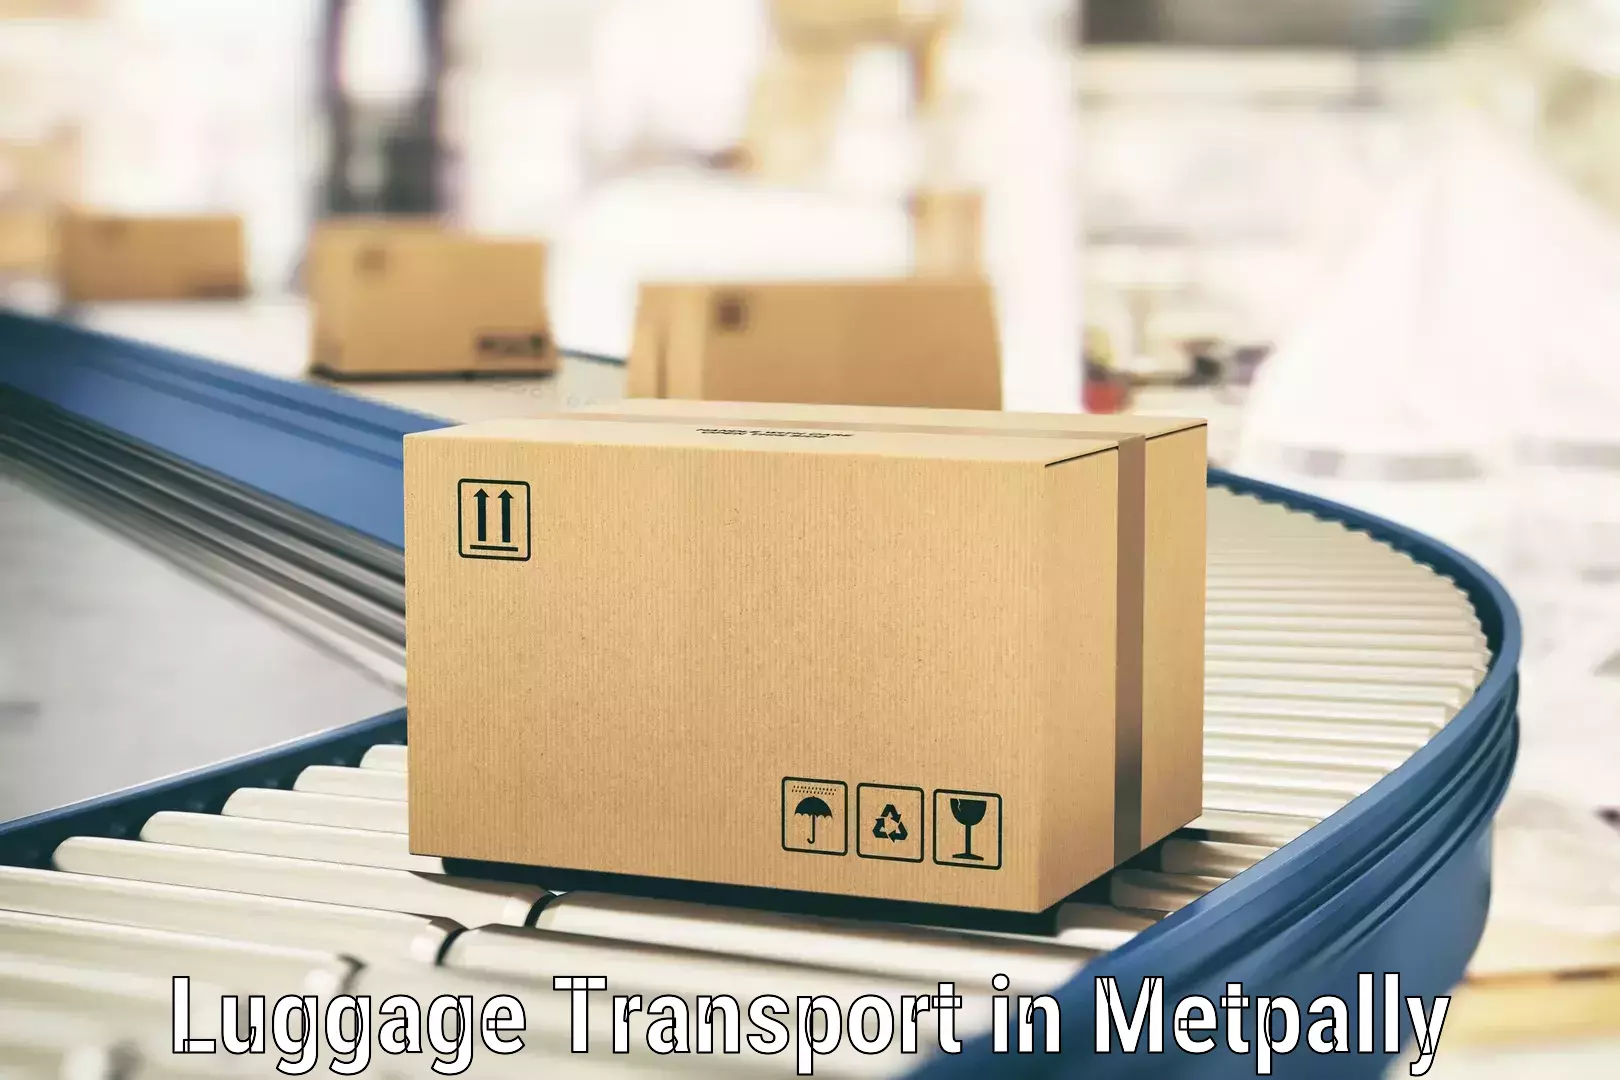 Multi-destination luggage transport in Metpally